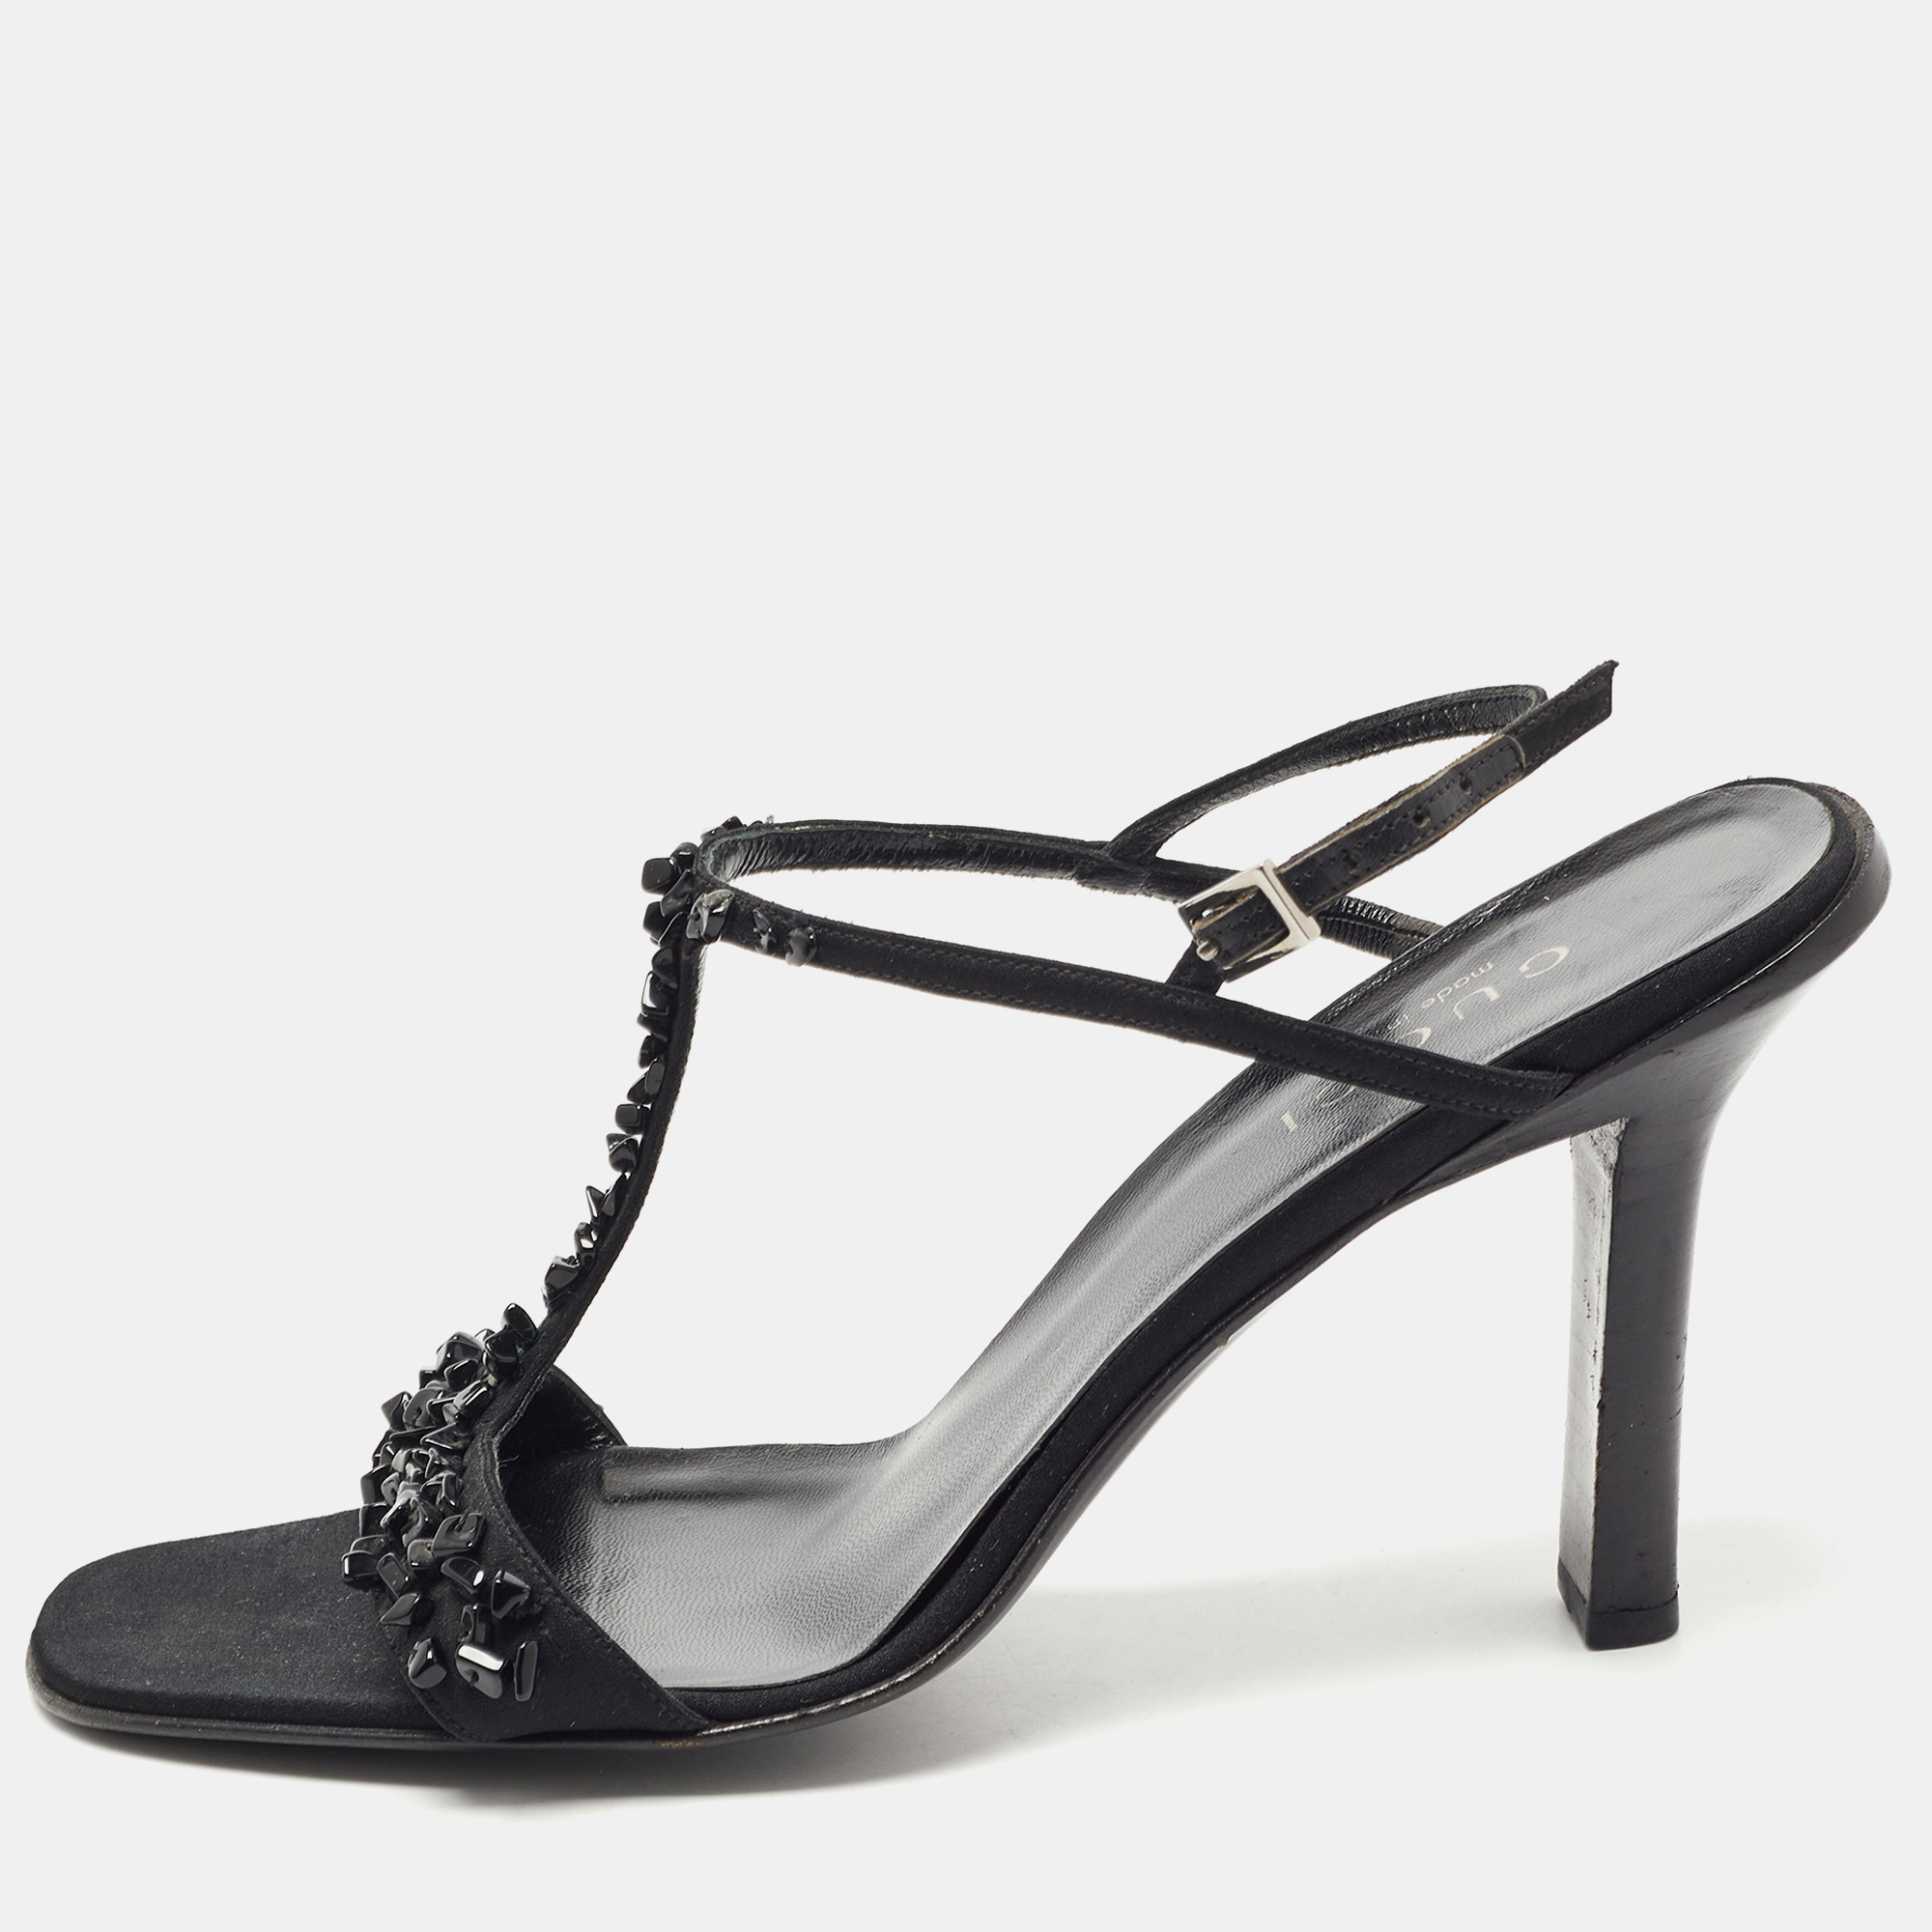 Pre-owned Gucci Black Satin Crystal Embellished Ankle Strap Sandals Size 38.5